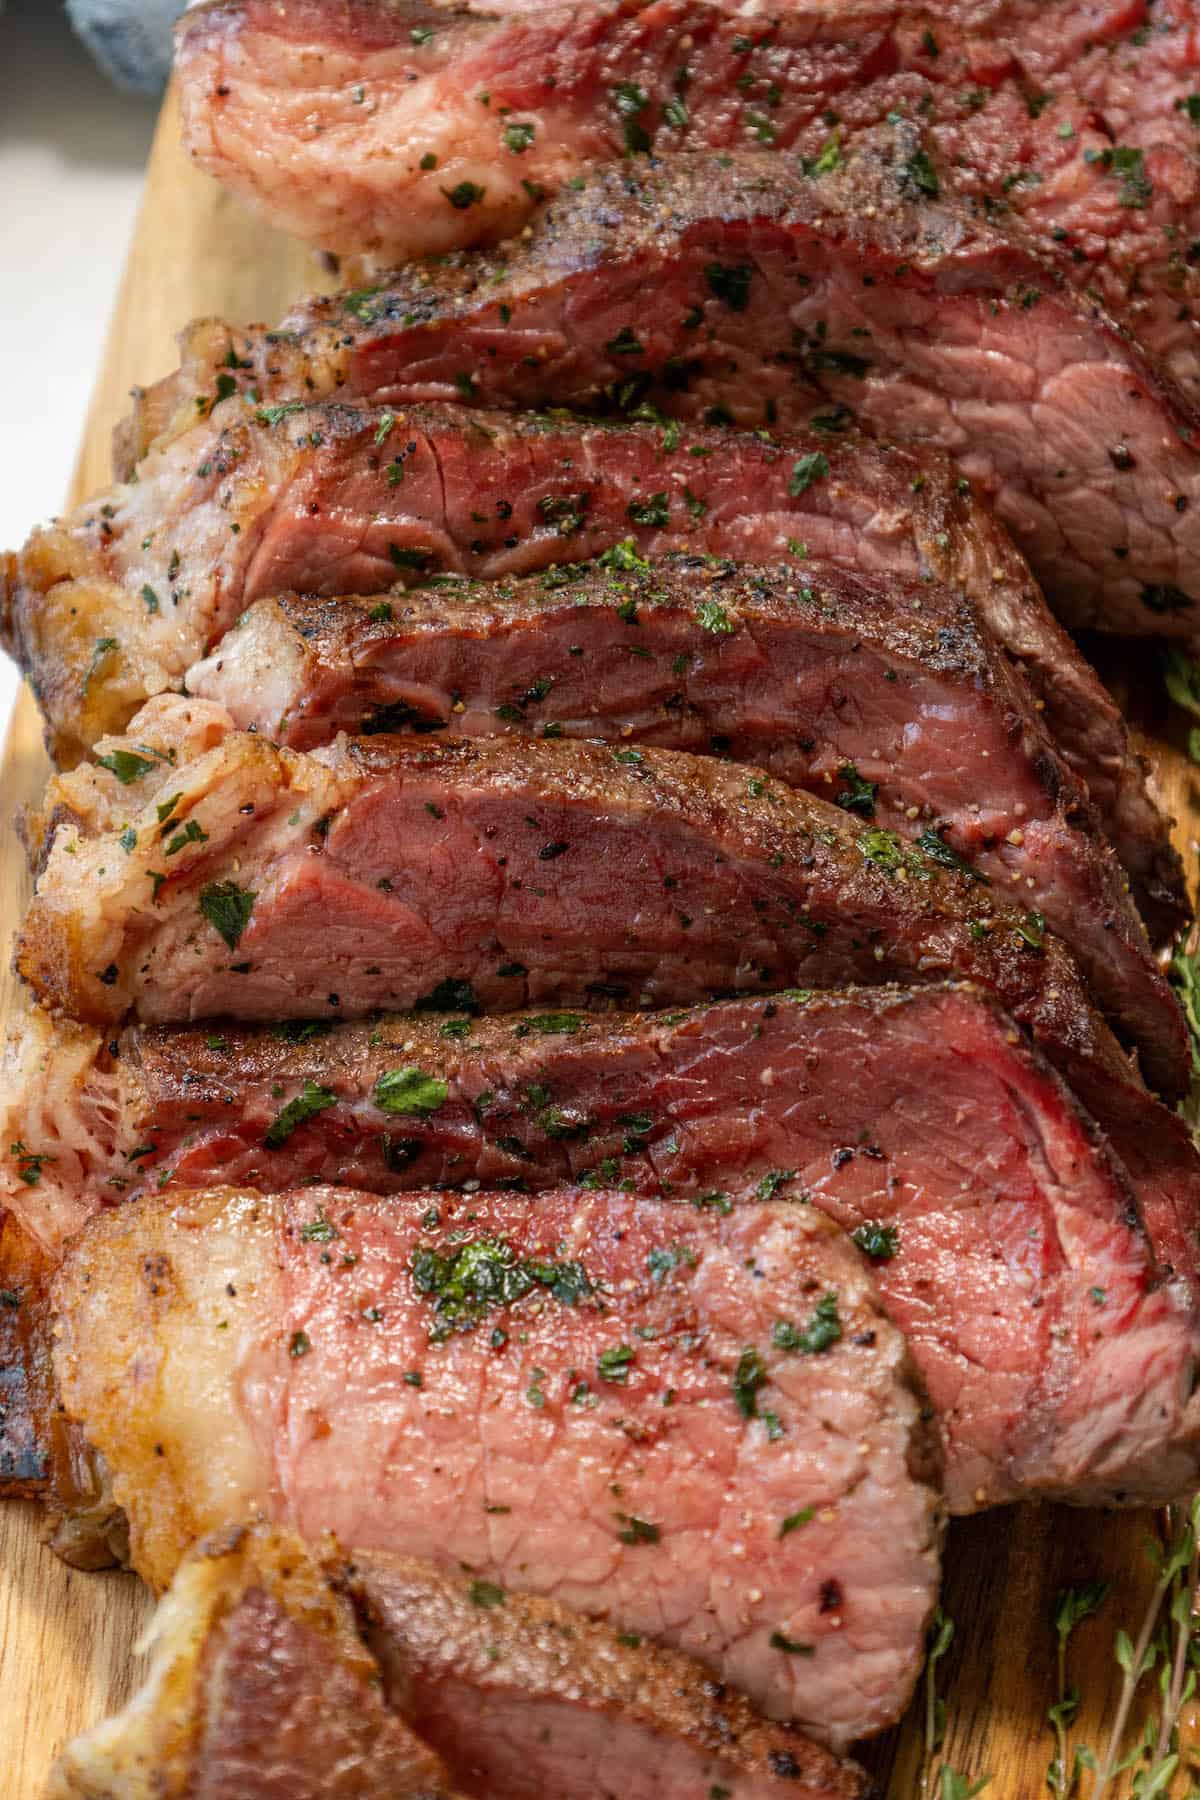 Rump roast steak on a cutting board with herbs.